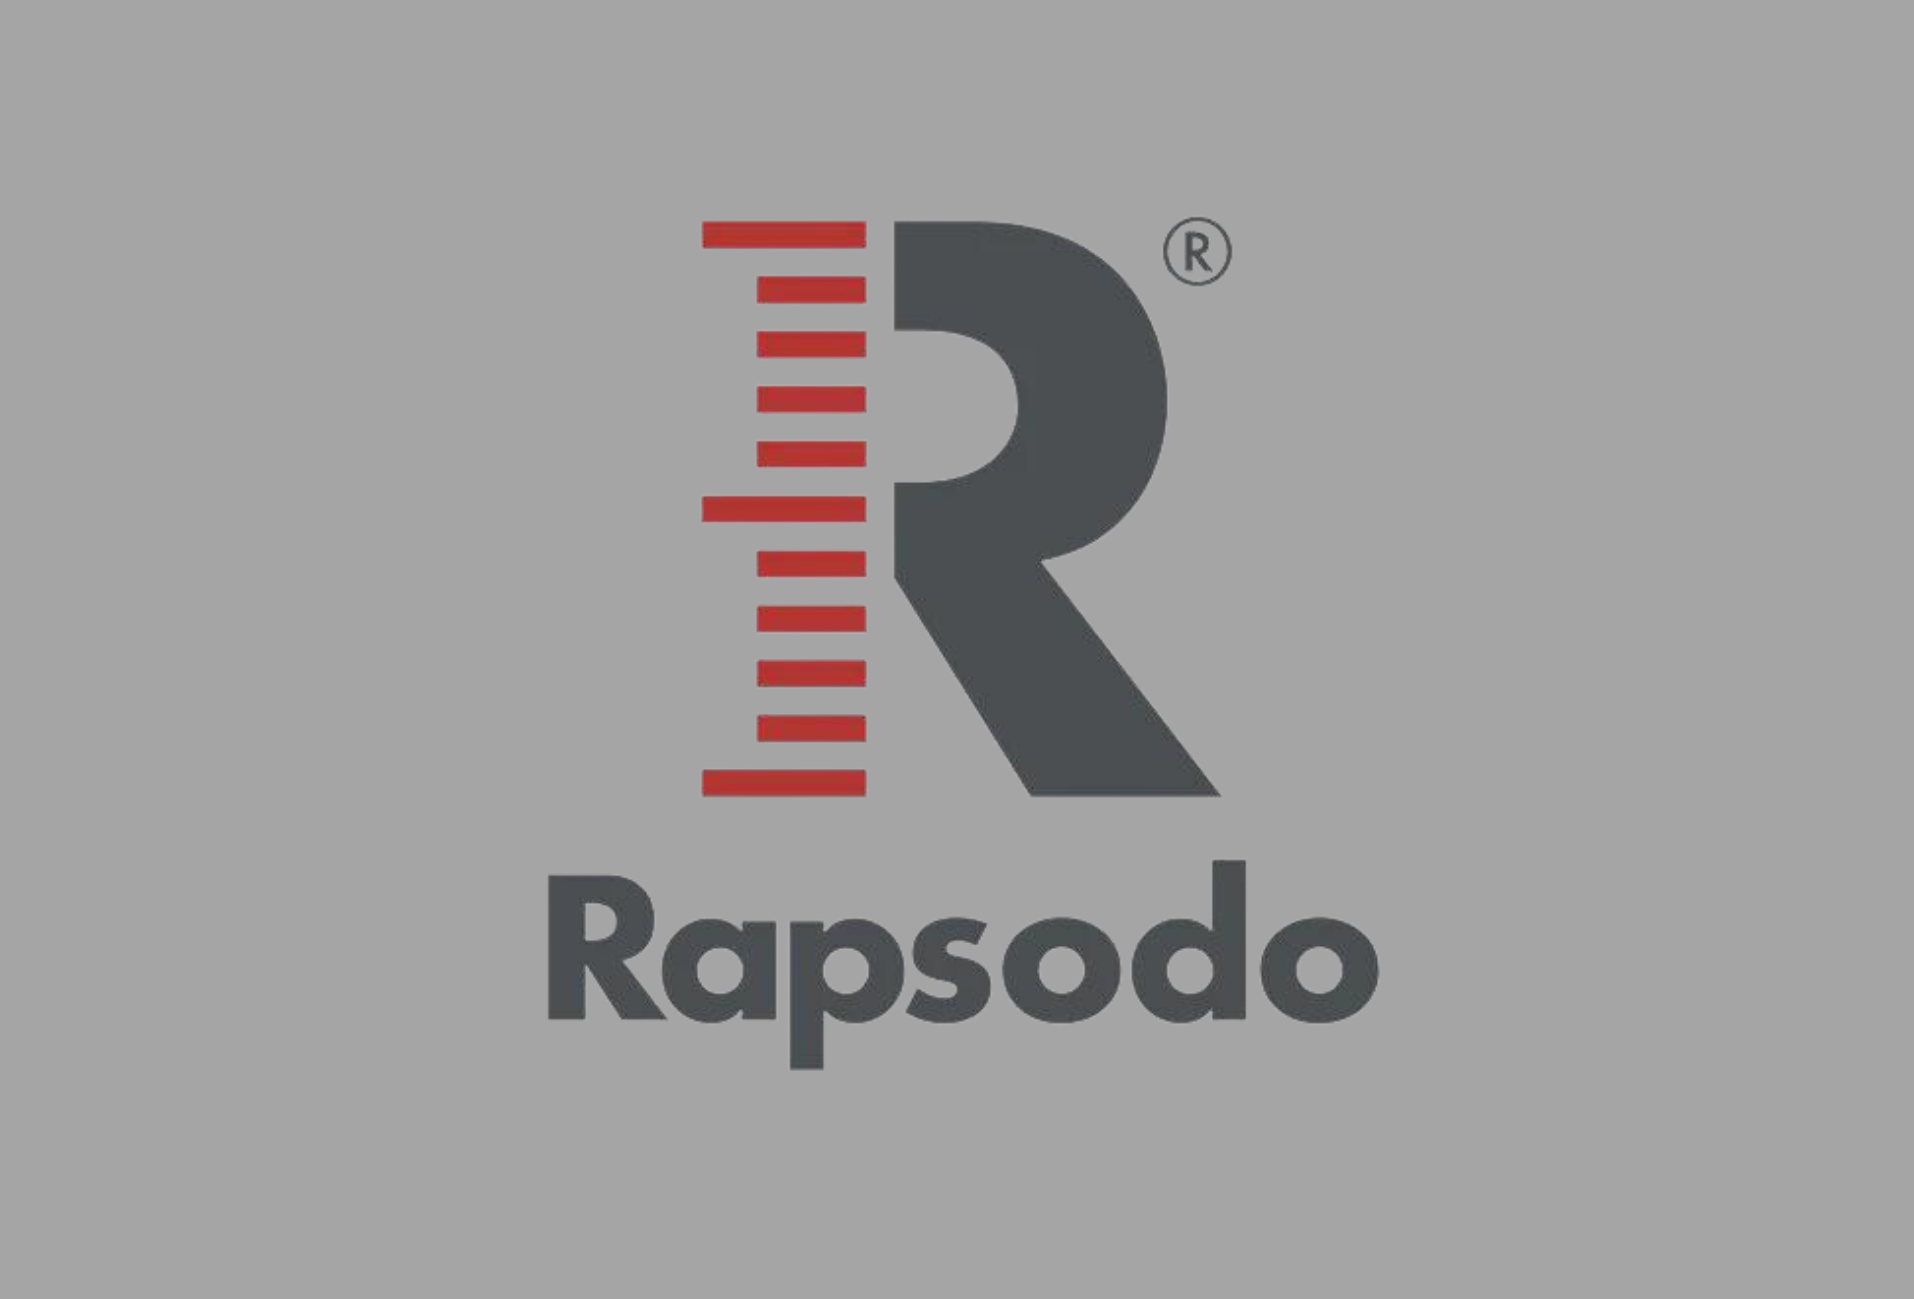 rapsodo logo pitching lessons